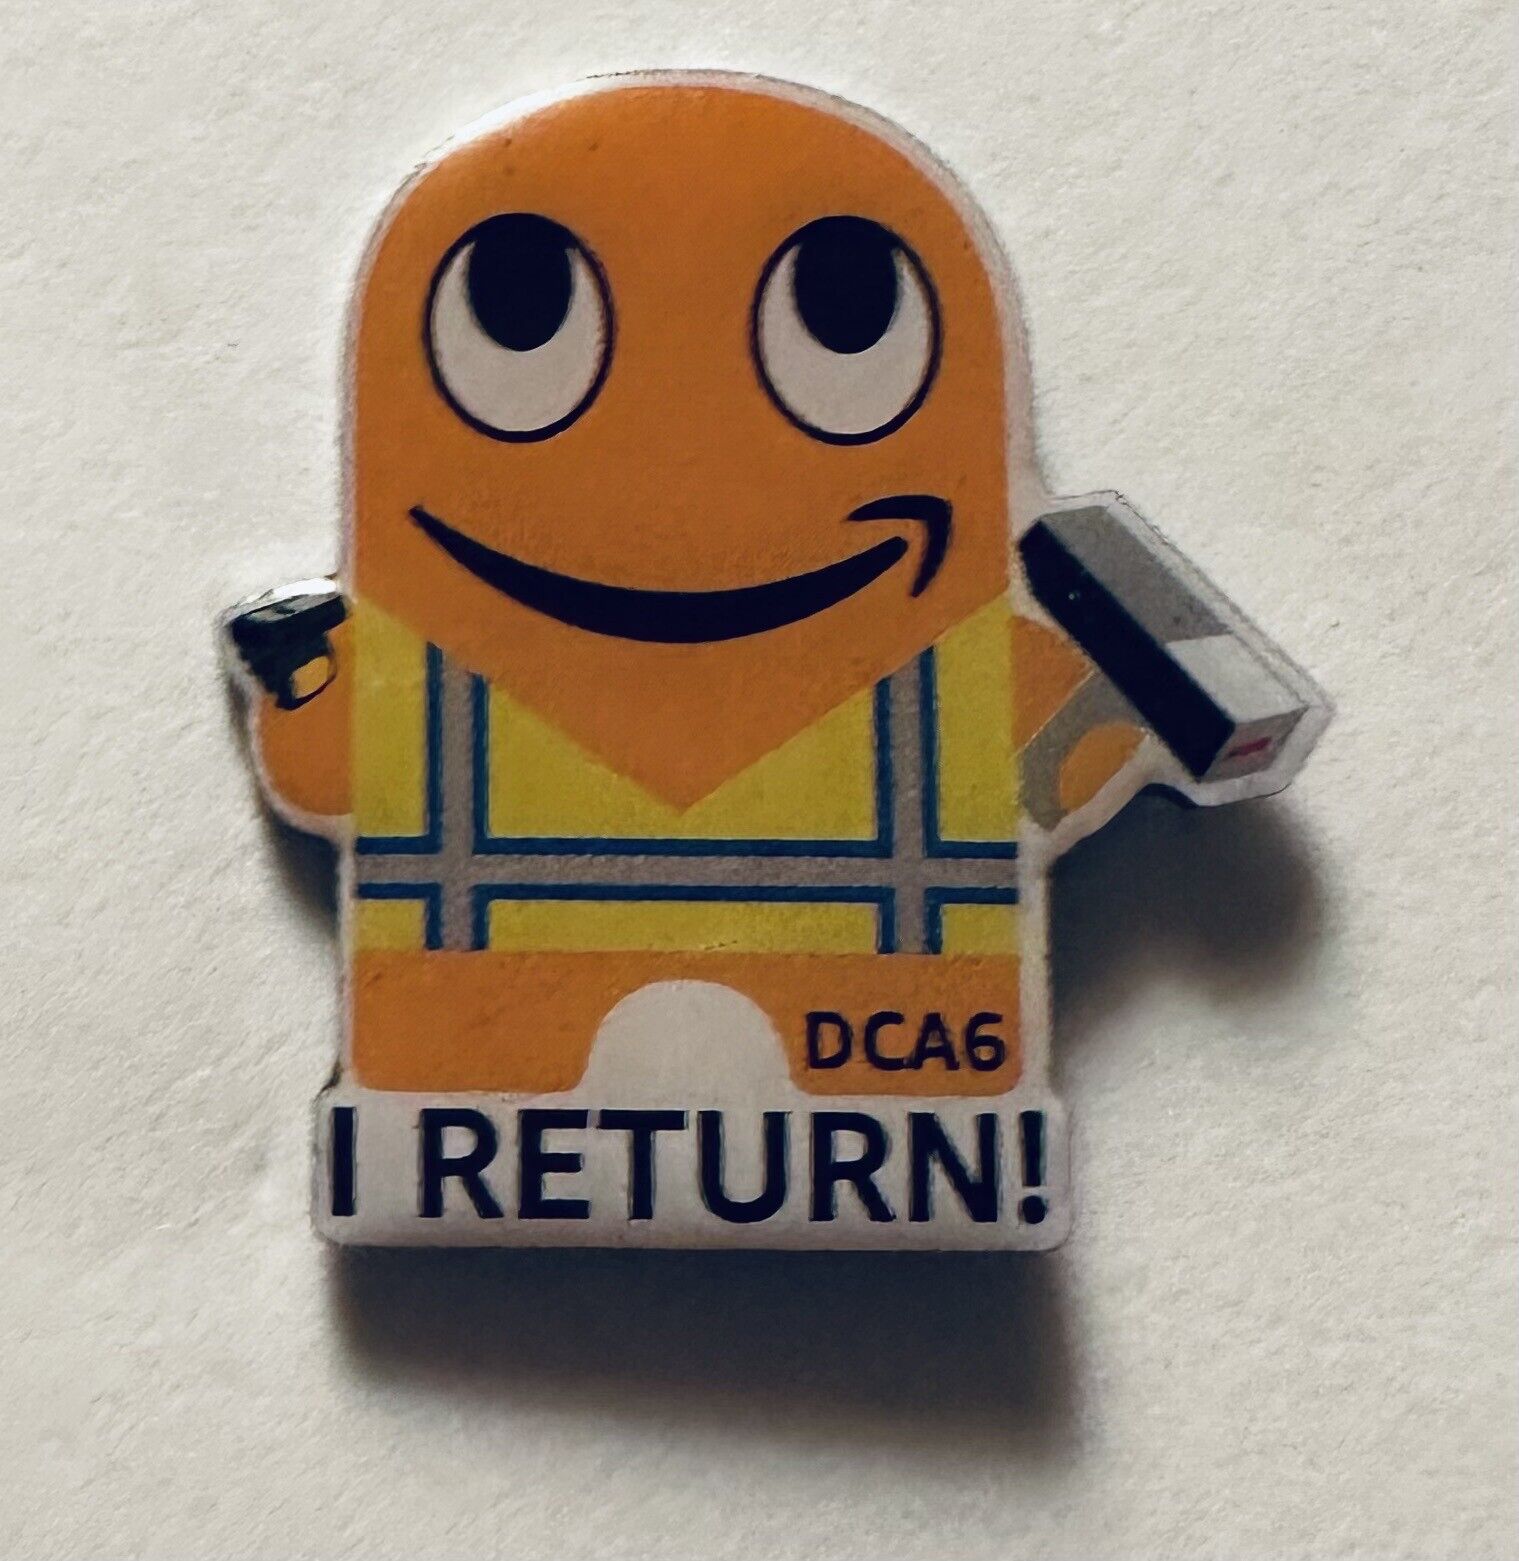 Amazon Peccy “I Return” DCA1 Pin